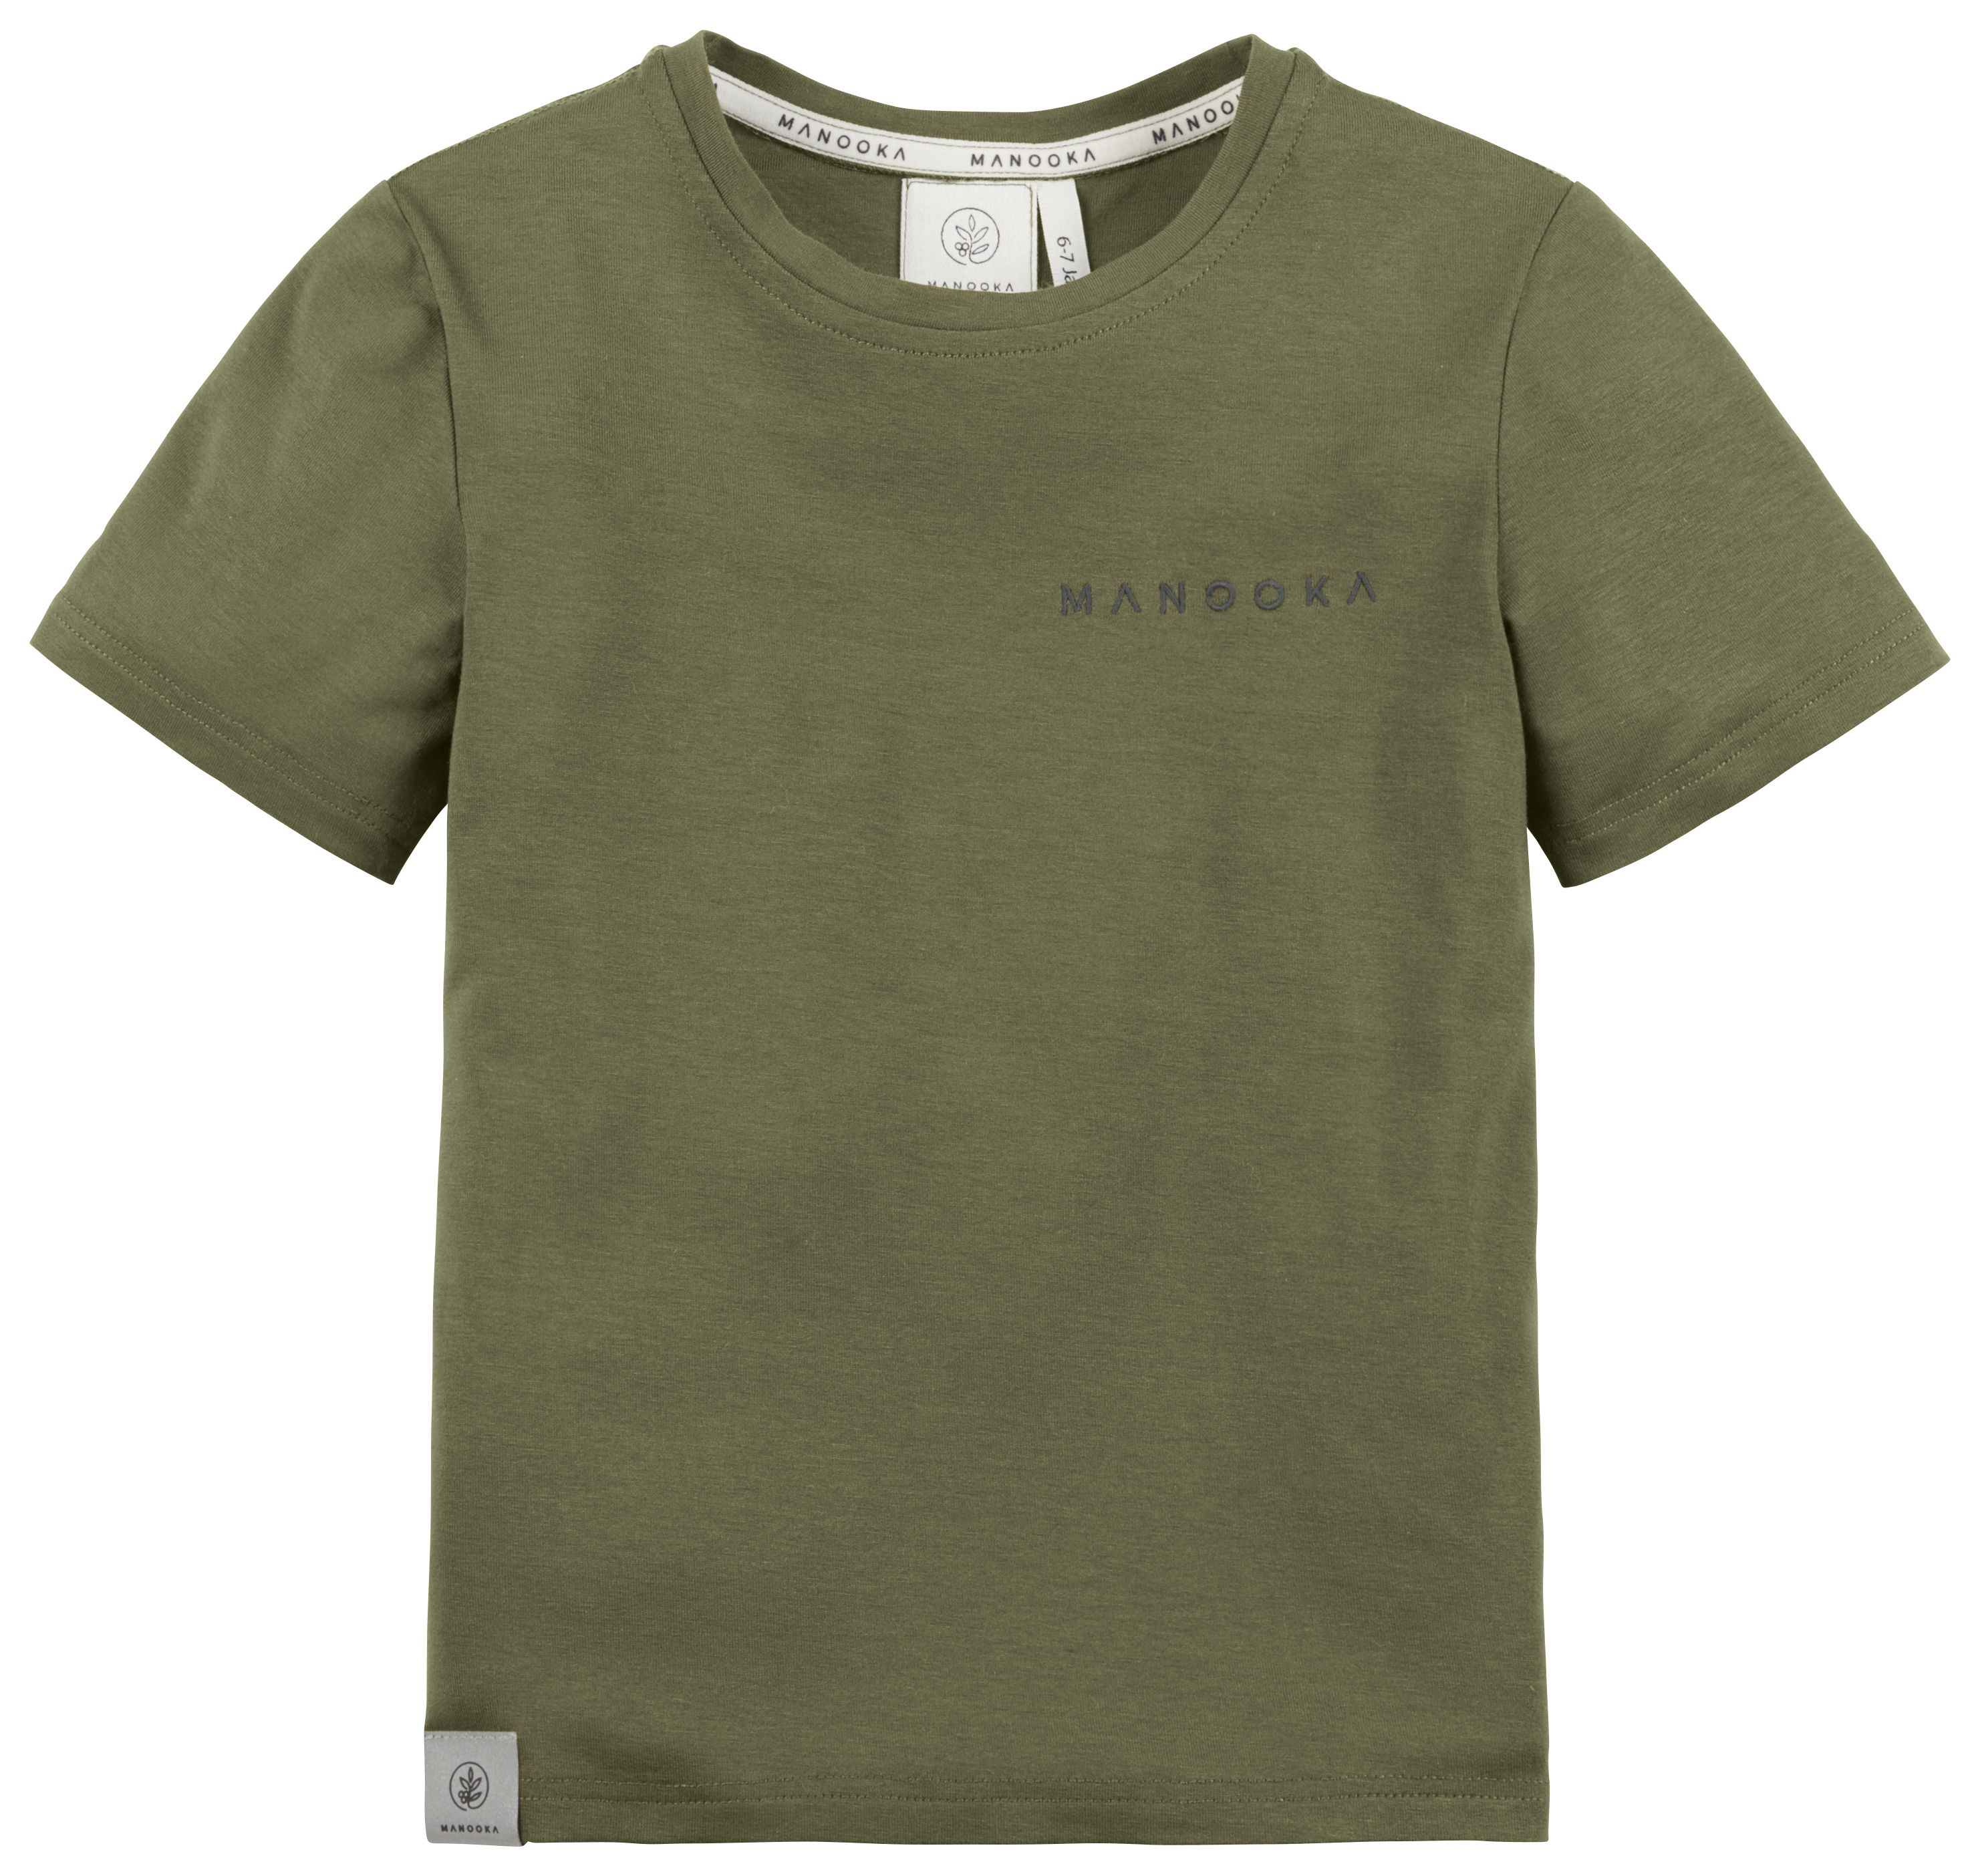 Ein grünes Hudson-Shirt